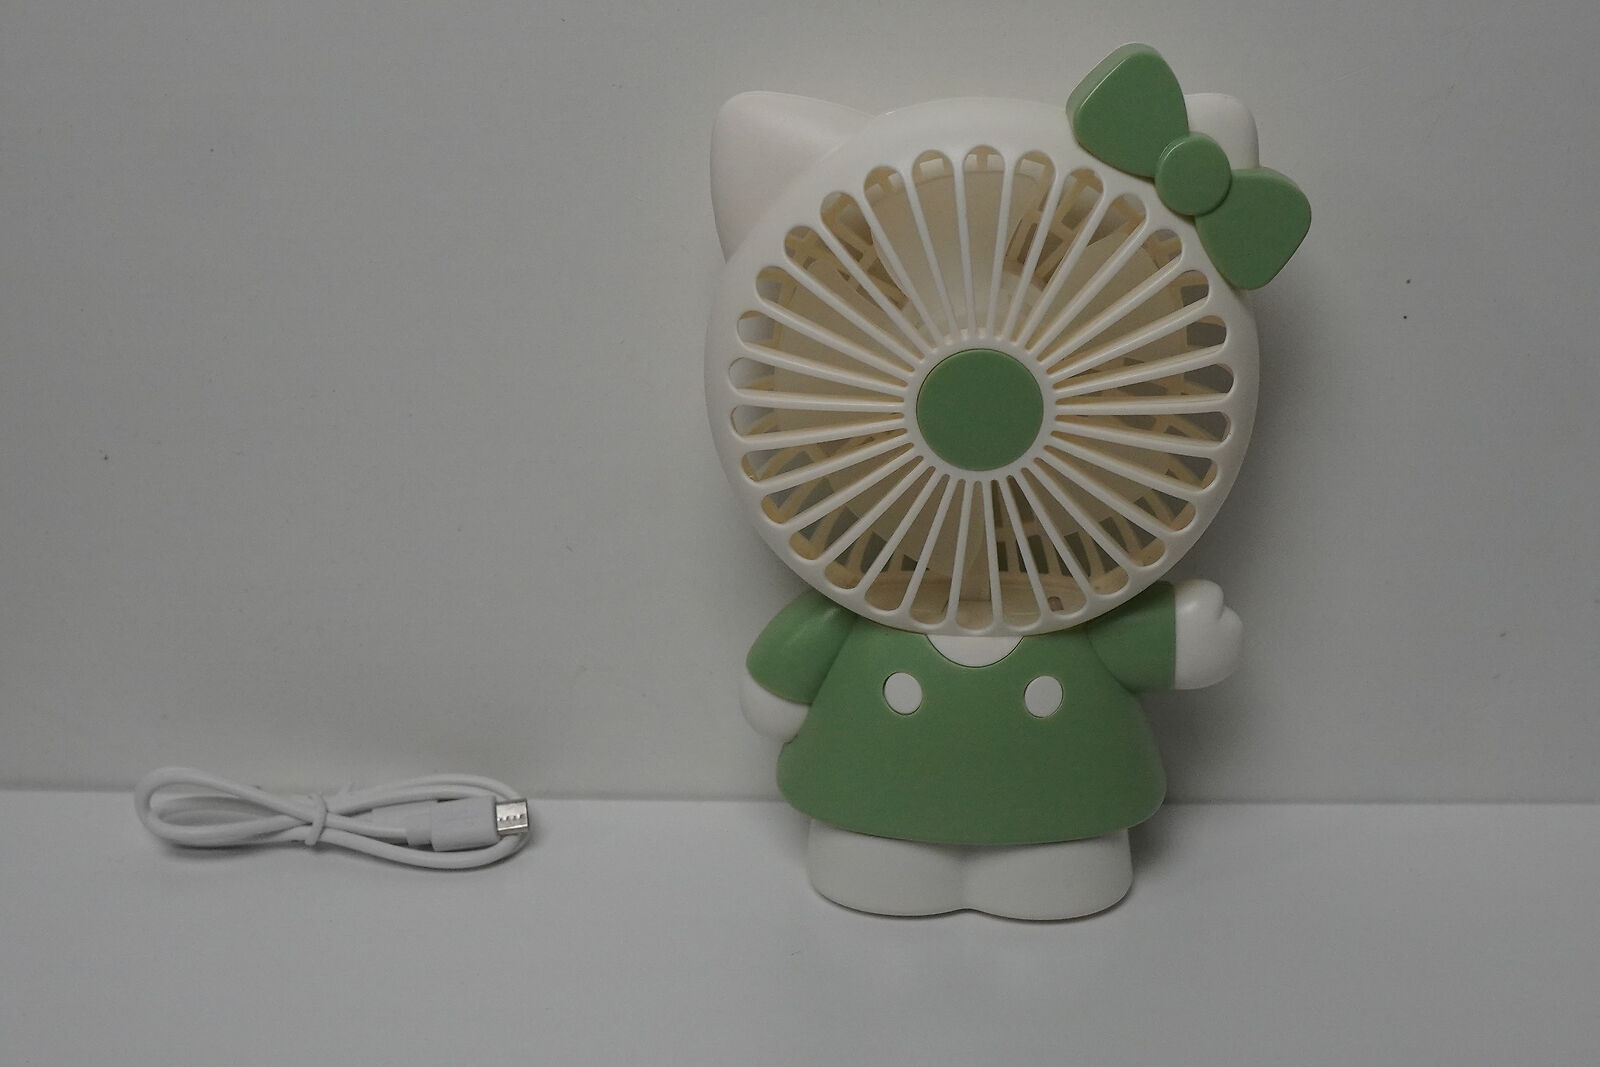 HelloKitty  Fan Handheld USB Charging Portable Electric Fan green white